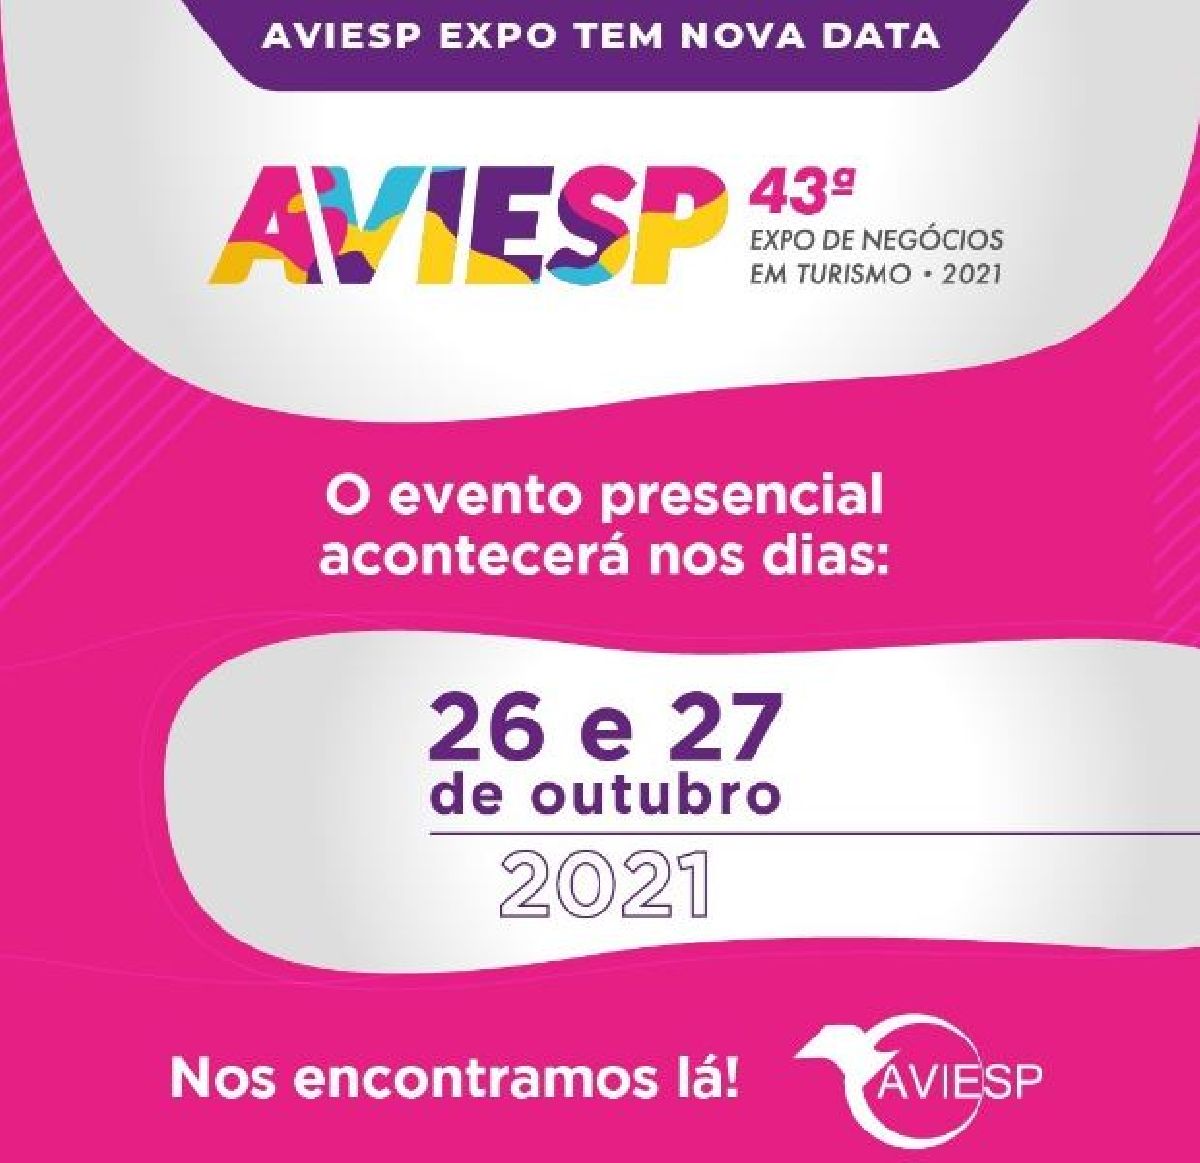 AVIESP EXPO TEM NOVA DATA: EVENTO PRESENCIAL ACONTECE DE 26 E 27 DE OUTUBRO